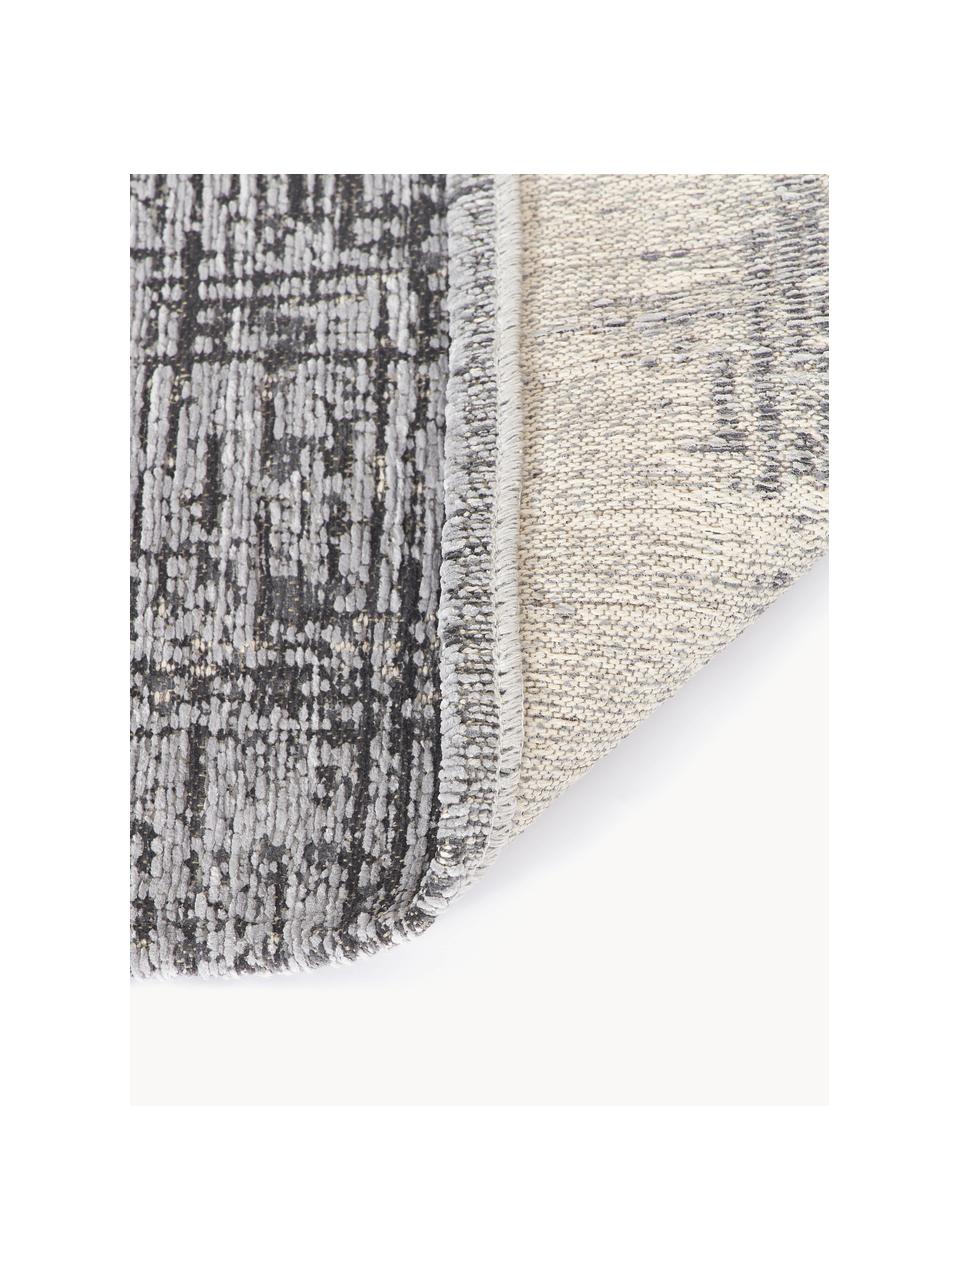 Läufer Laurence, 70% Polyester, 30% Baumwolle (GRS-zertifiziert), Grau, Schwarz, B 80 x L 250 cm